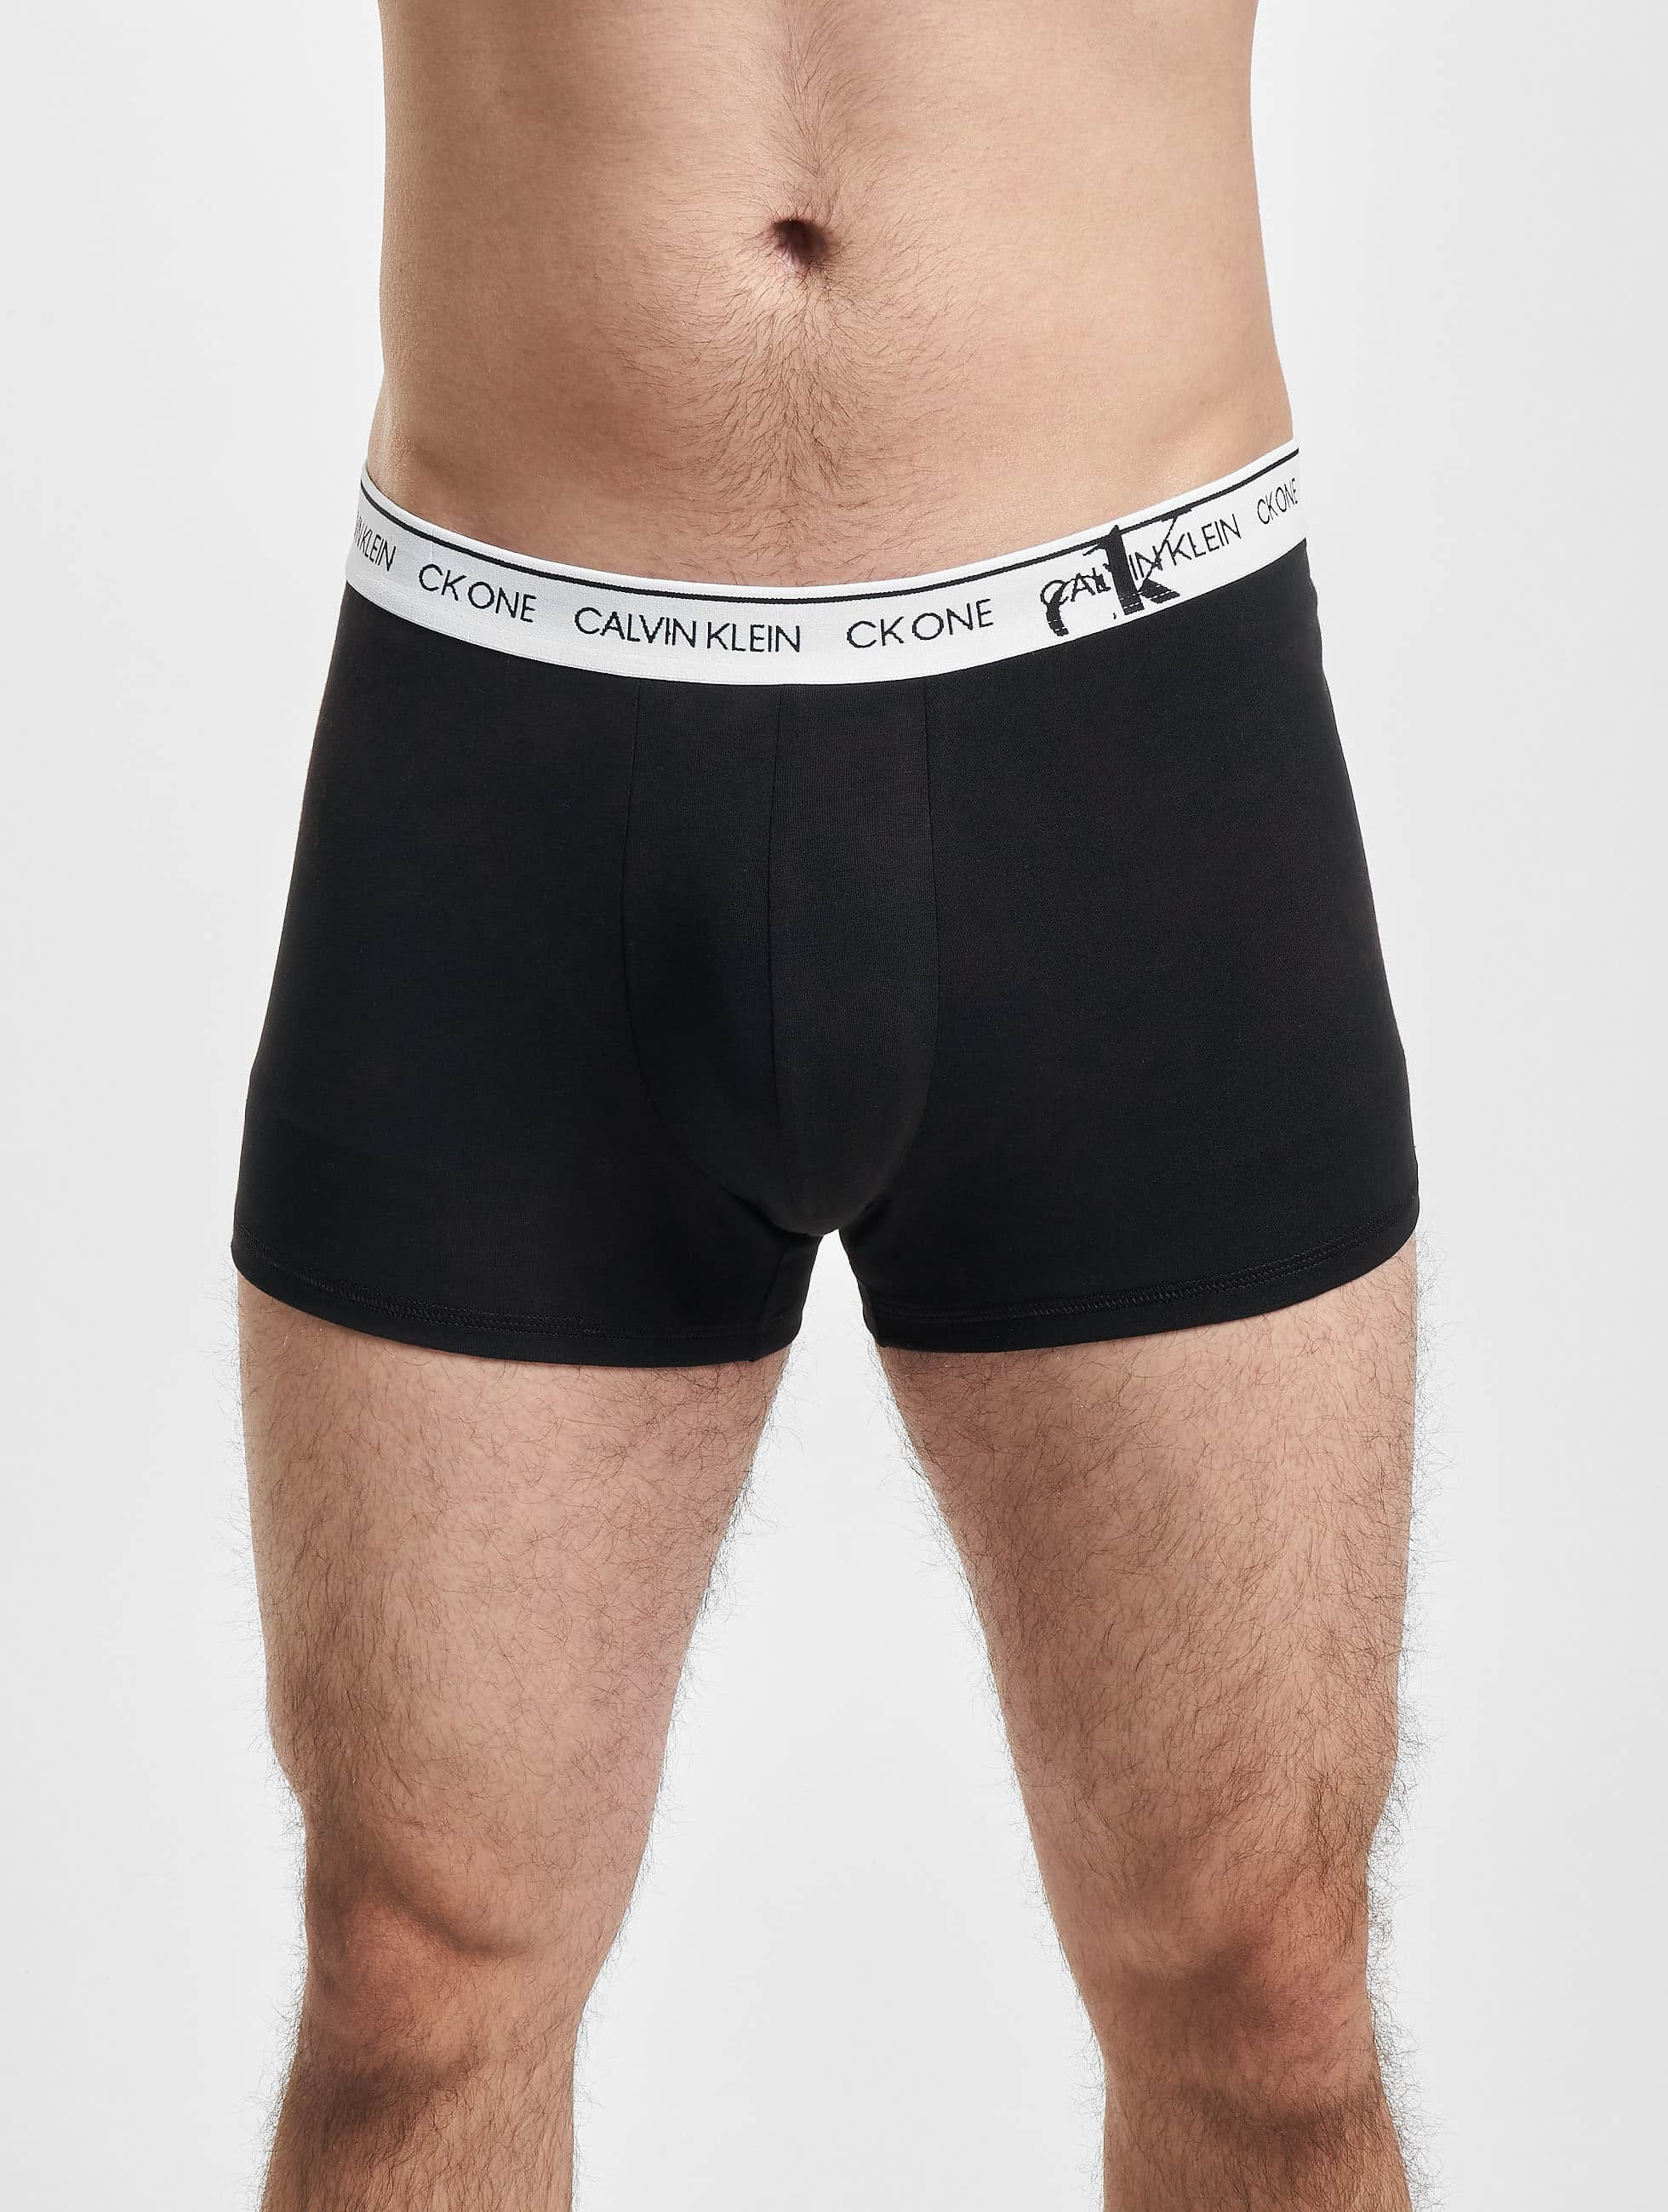 sensor Ontkennen discretie Calvin Klein Ondergoed / Badmode / boxershorts Underwear in zwart 972033